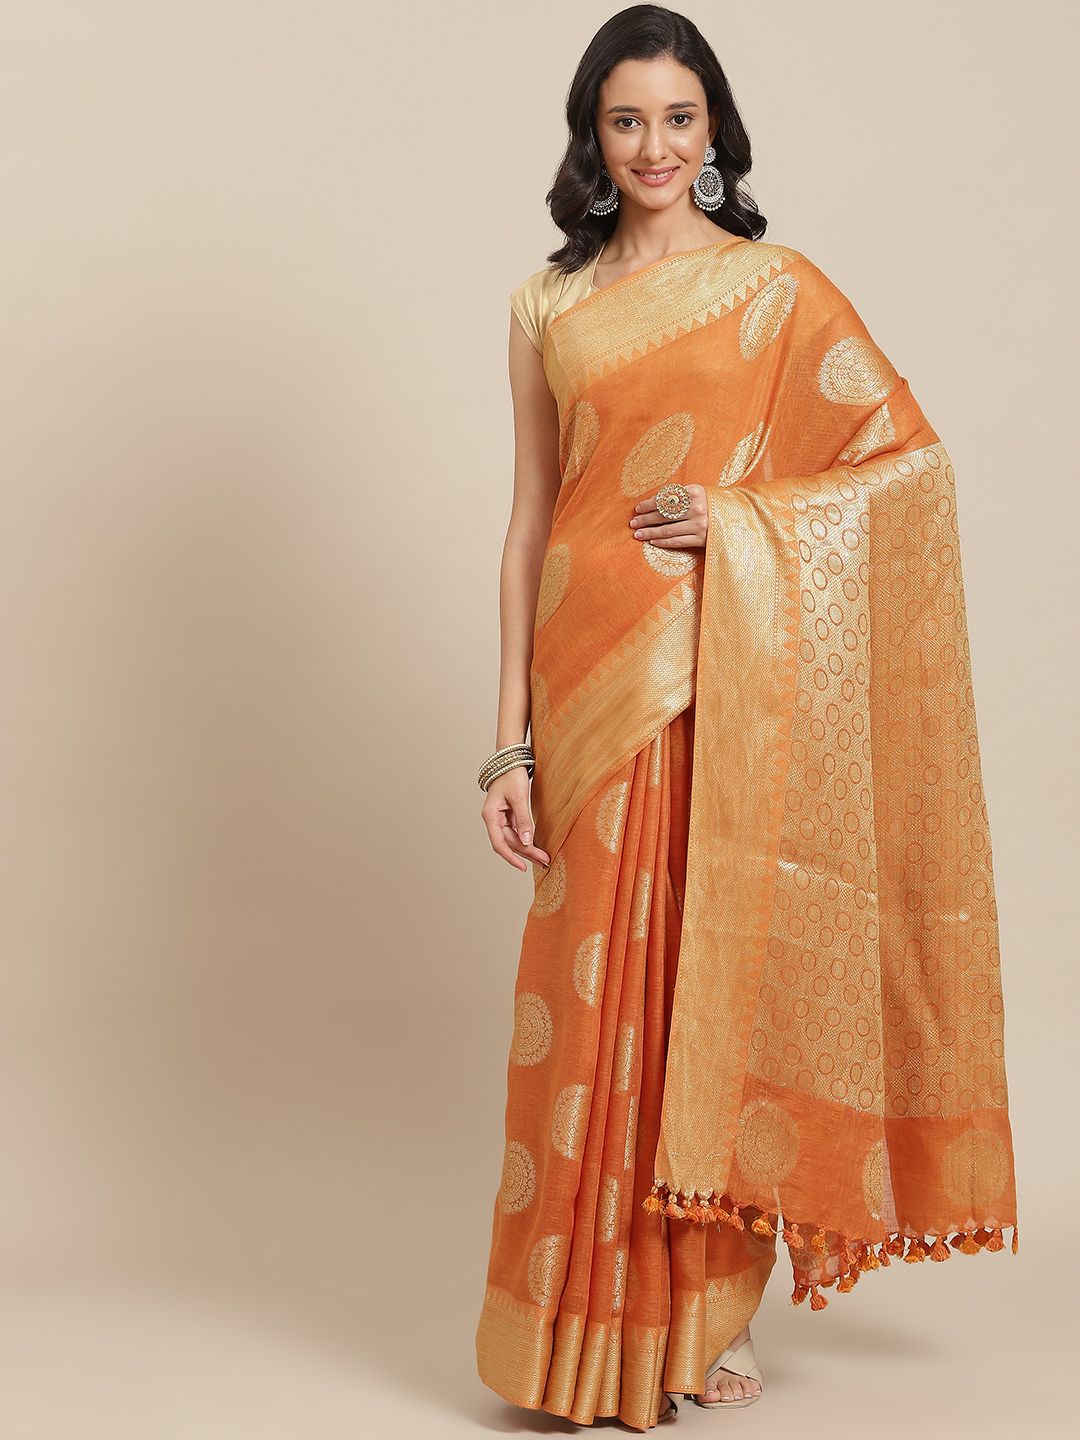 swatika Orange & Gold-Toned Ethnic Motifs Zari Pure Linen Bhagalpuri Saree Price in India